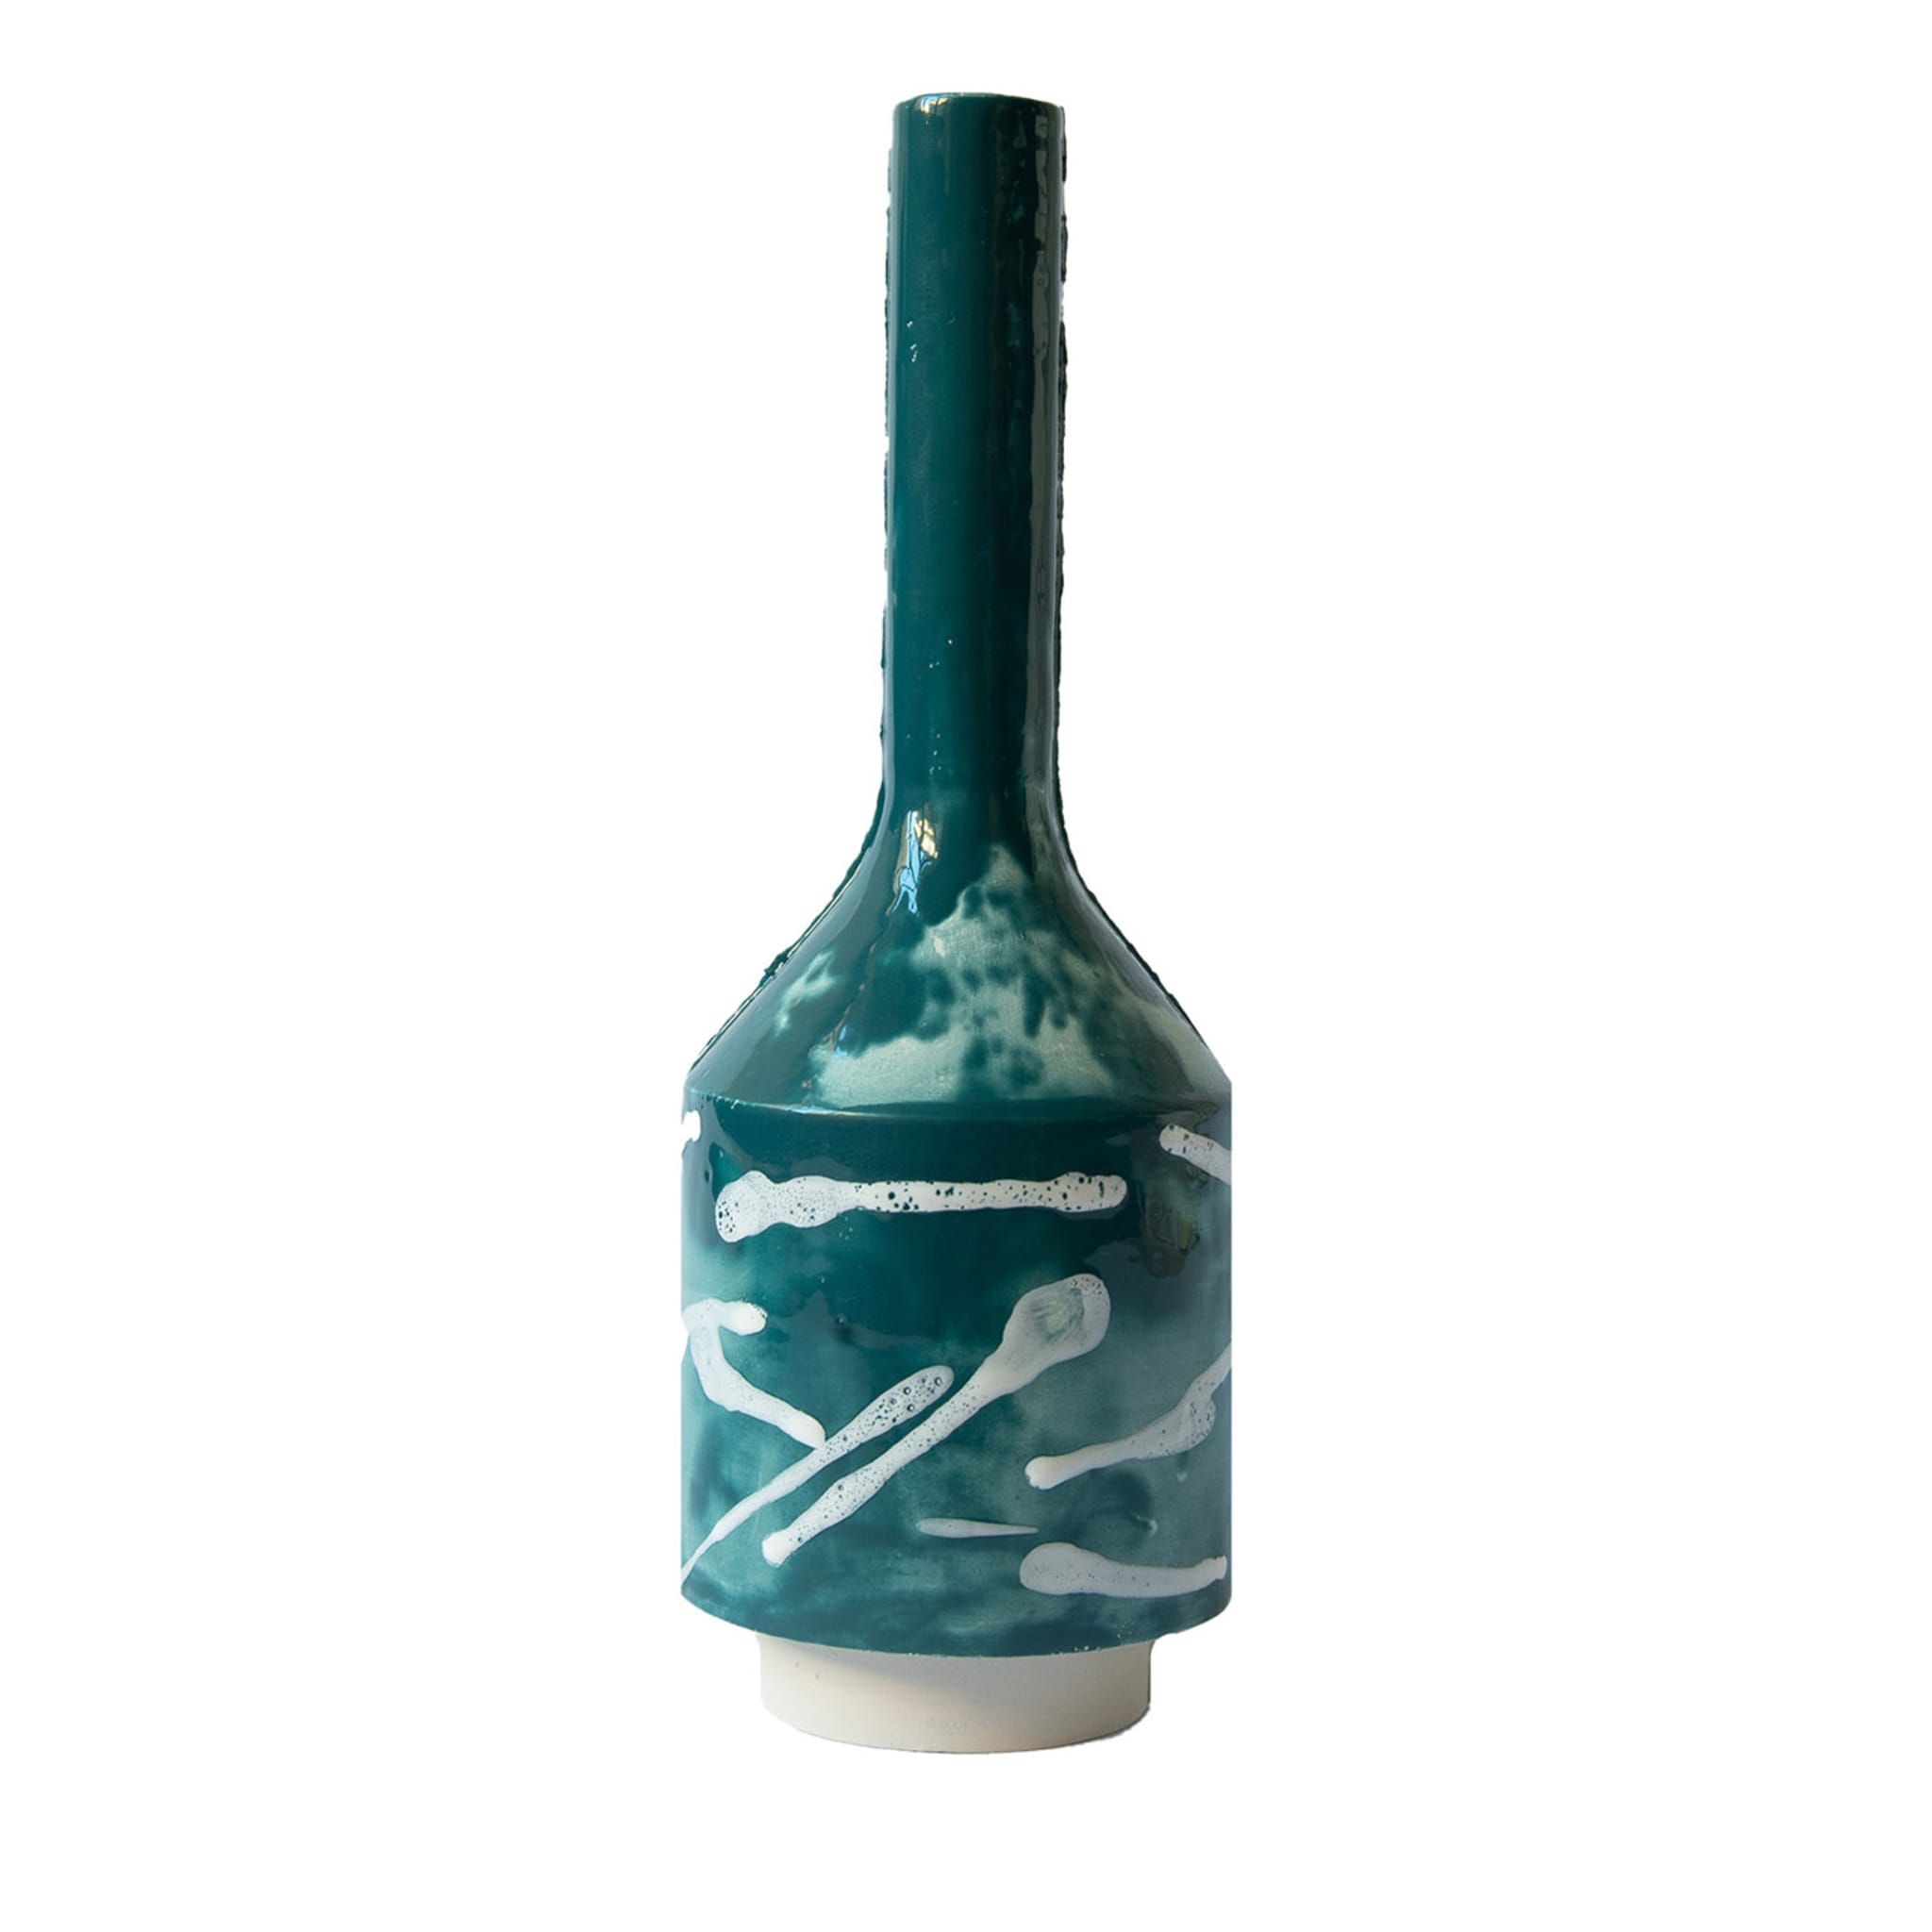 Marmo Serpentino Teal Single-Stem Vase - Main view